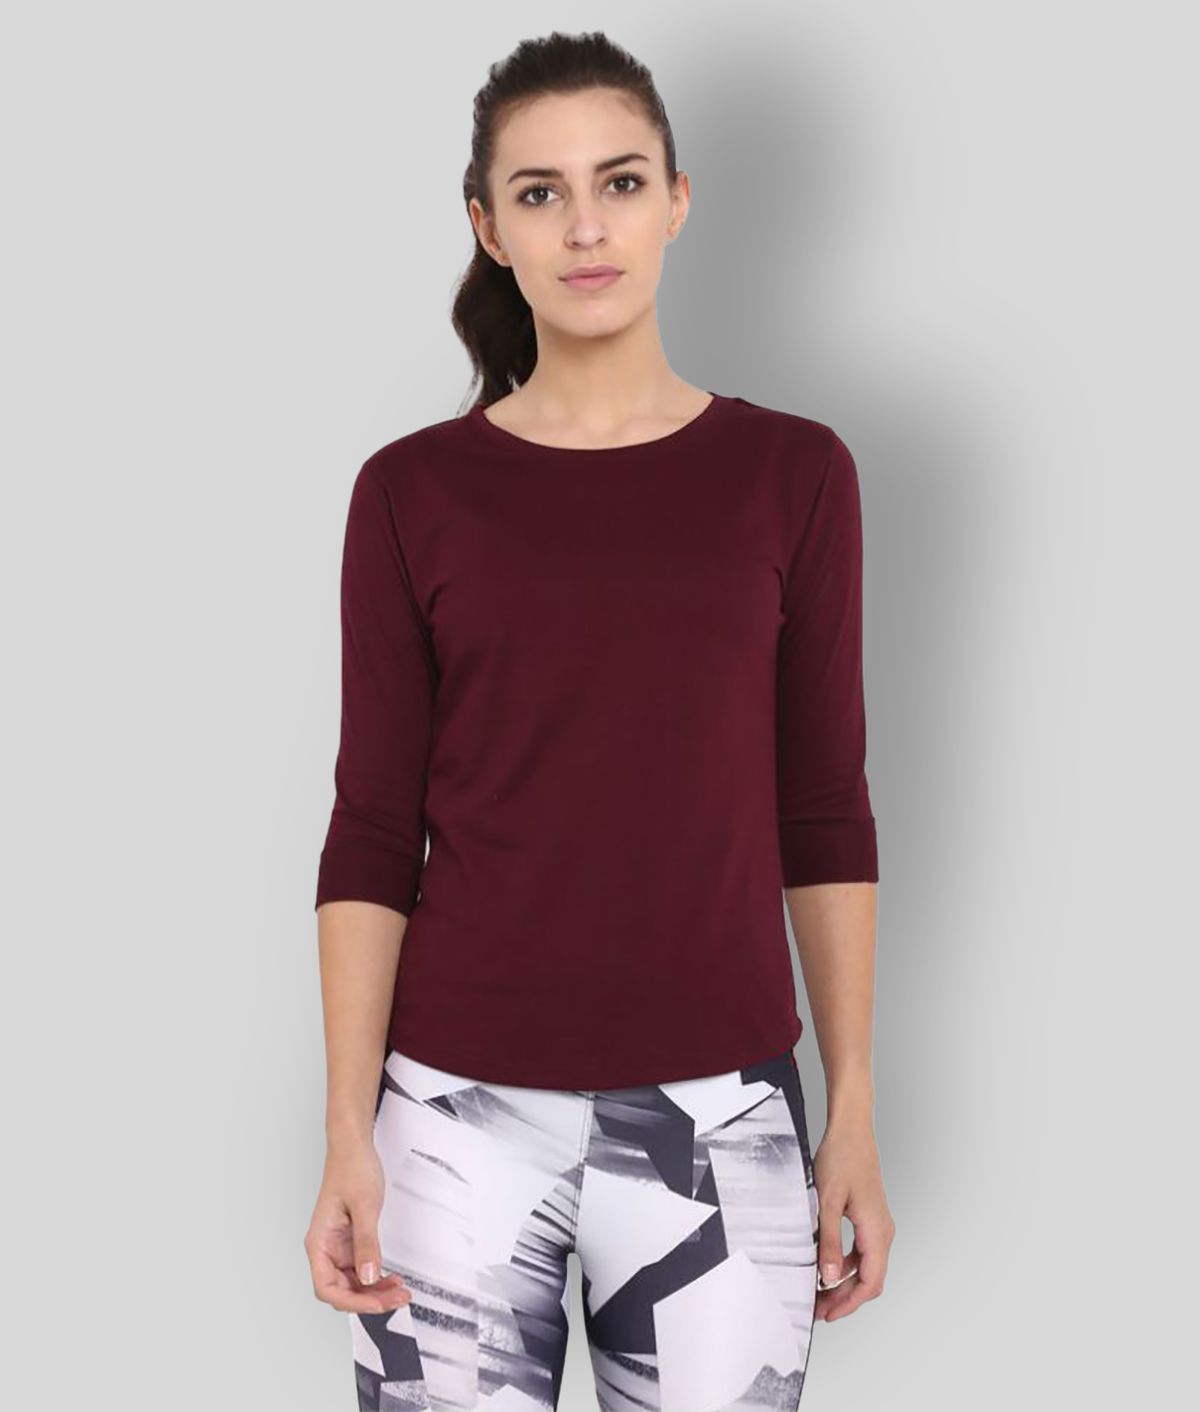     			Ap'pulse - Maroon Cotton Regular Fit Women's T-Shirt ( Pack of 1 )